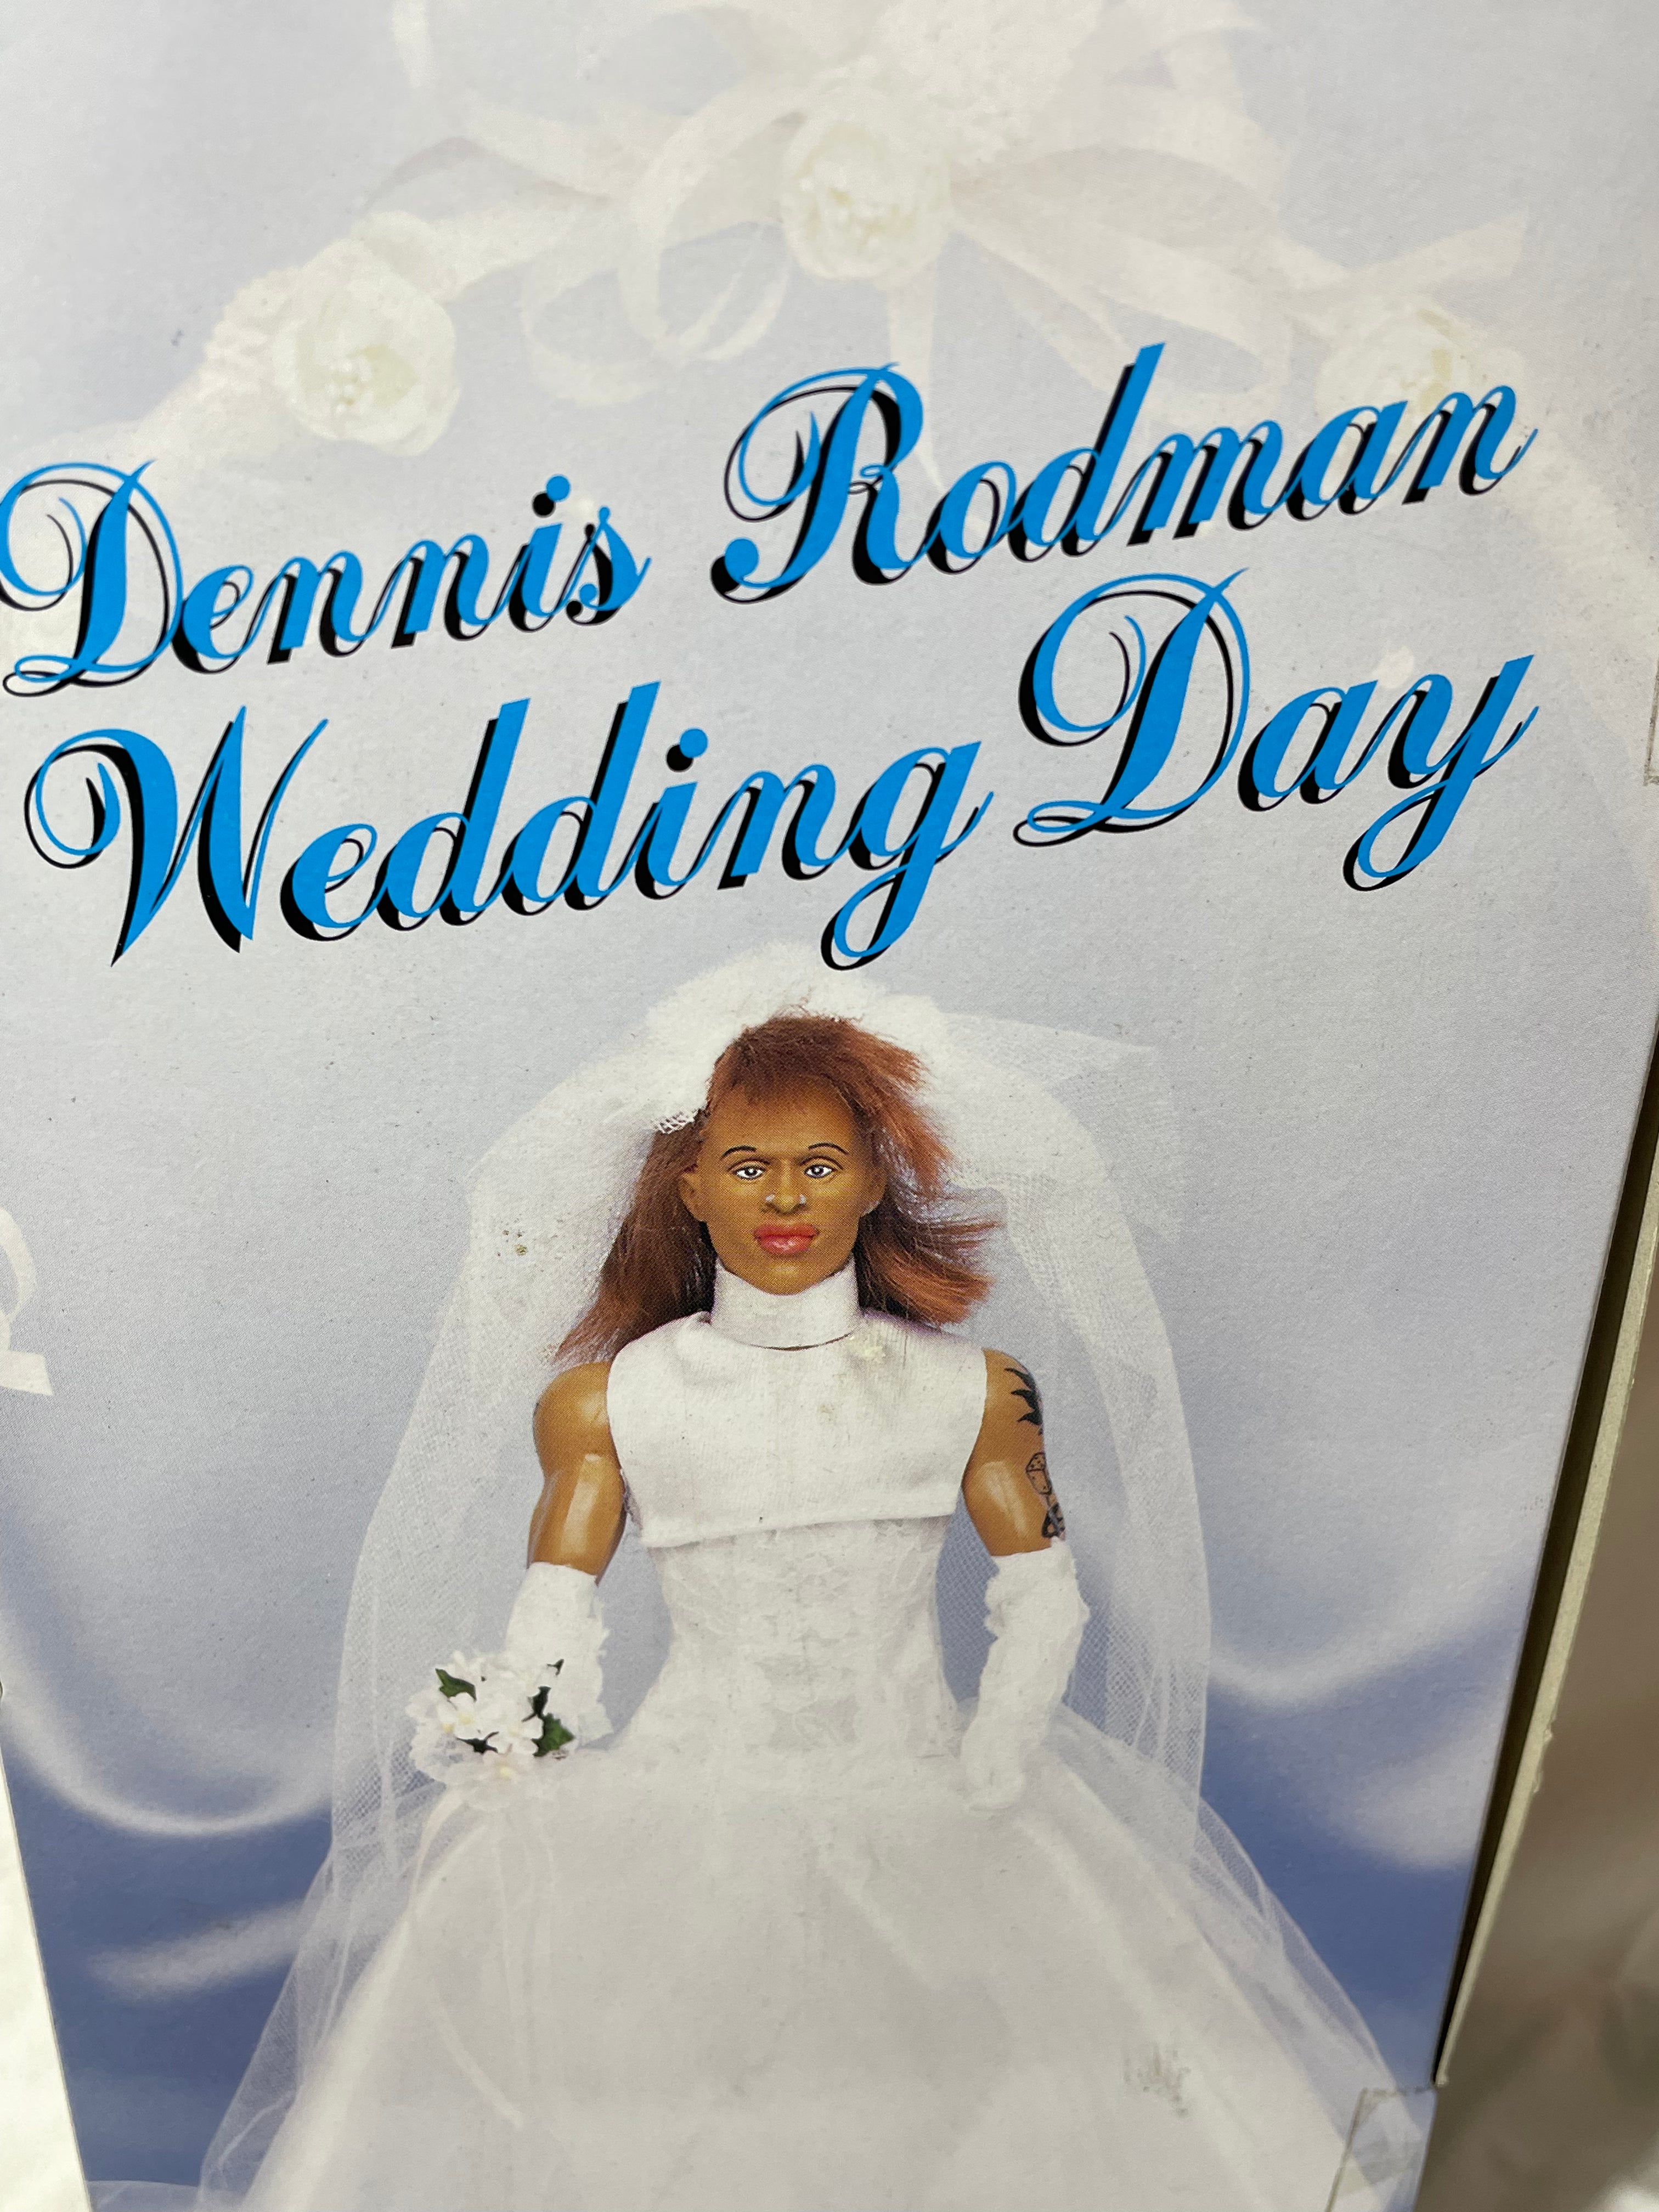 dennis rodman in a wedding dress